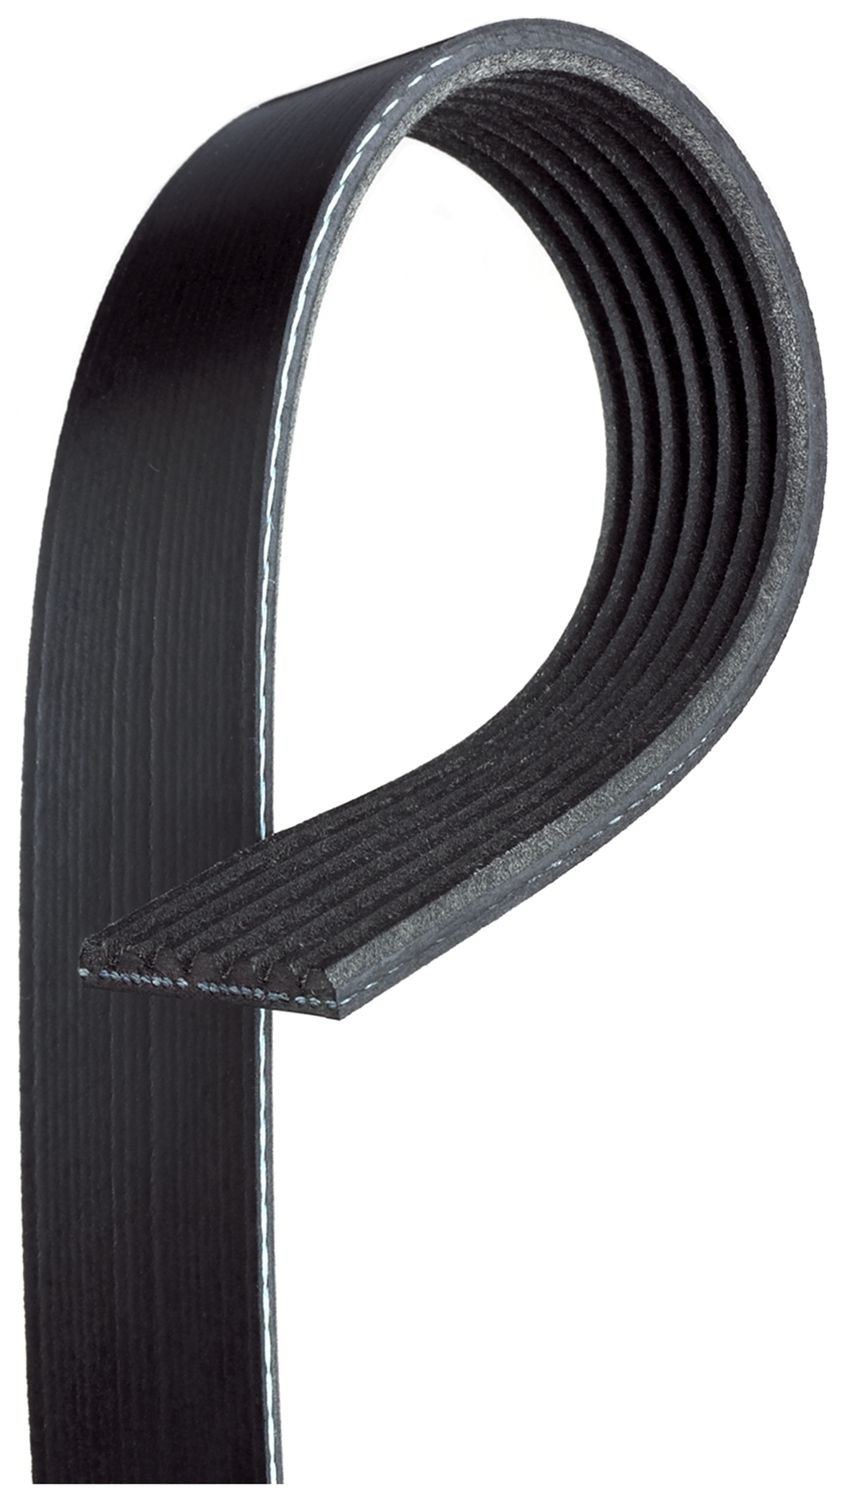 GATES 7PK1370 Serpentine belt 1370mm, 7, G-Force™ C12™ CVT Belt